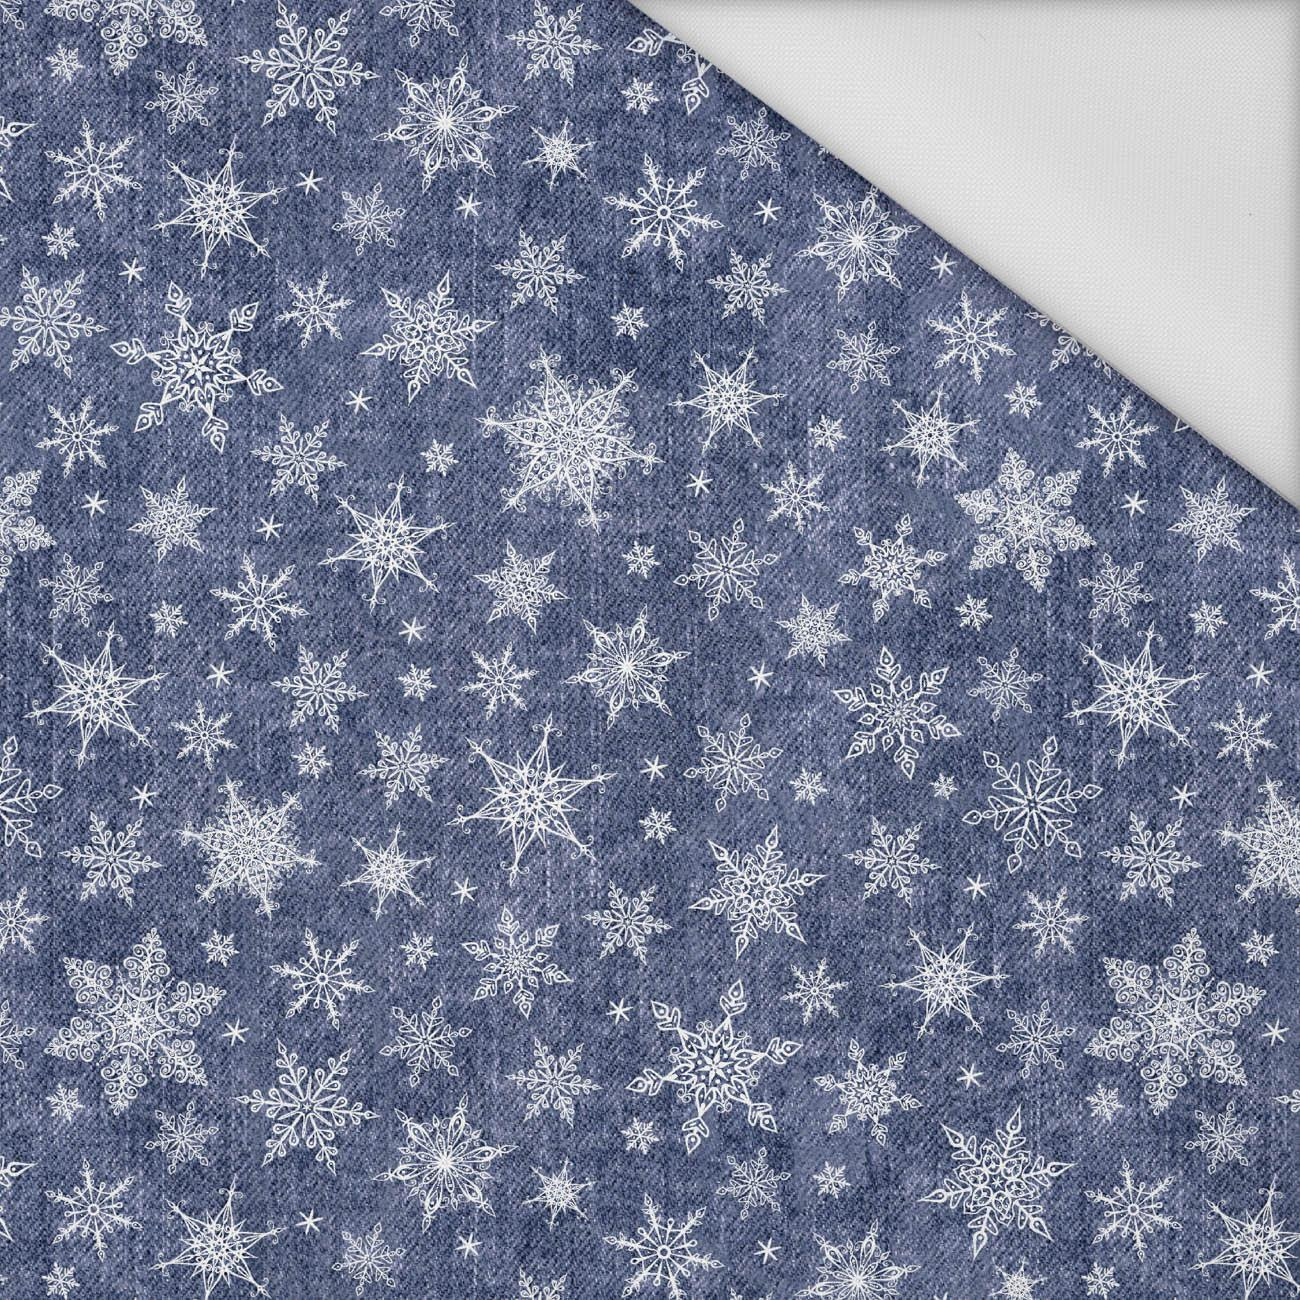 SNOWFLAKES PAT. 2 / ACID WASH DARK BLUE - Waterproof woven fabric